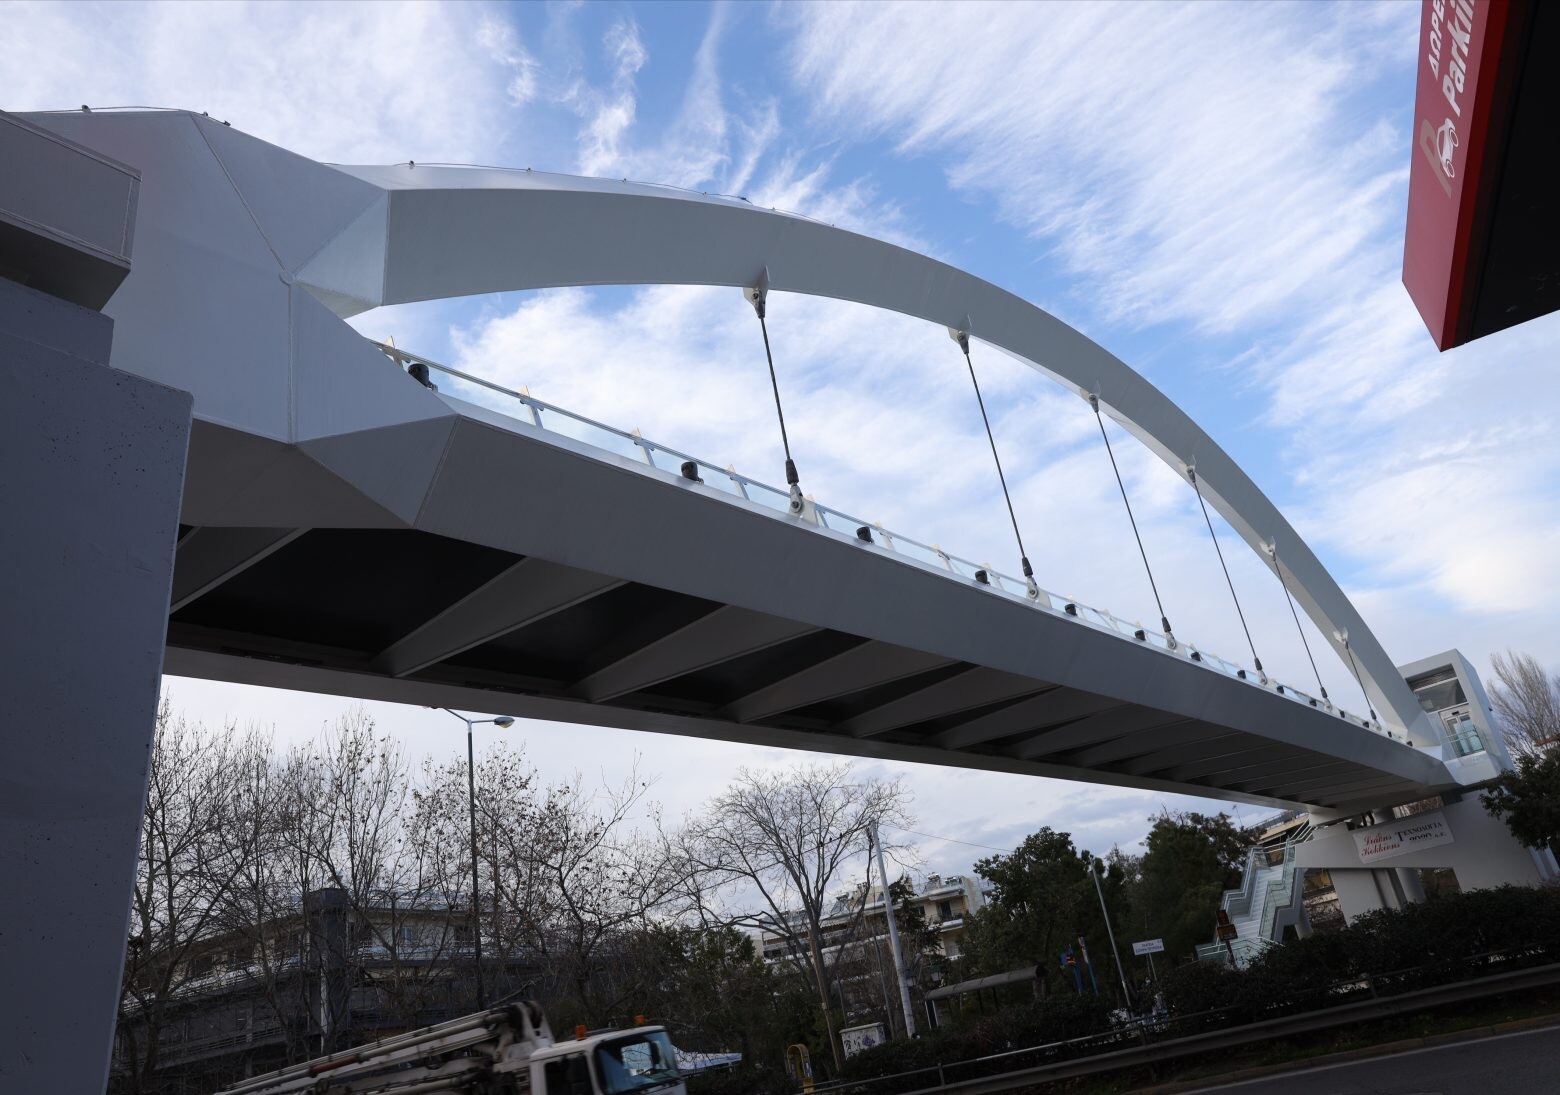 More information about "Παραδόθηκε η νέα σύγχρονη πεζογέφυρα επί της Λ. Μεσογείων στην Αγ. Παρασκευή"